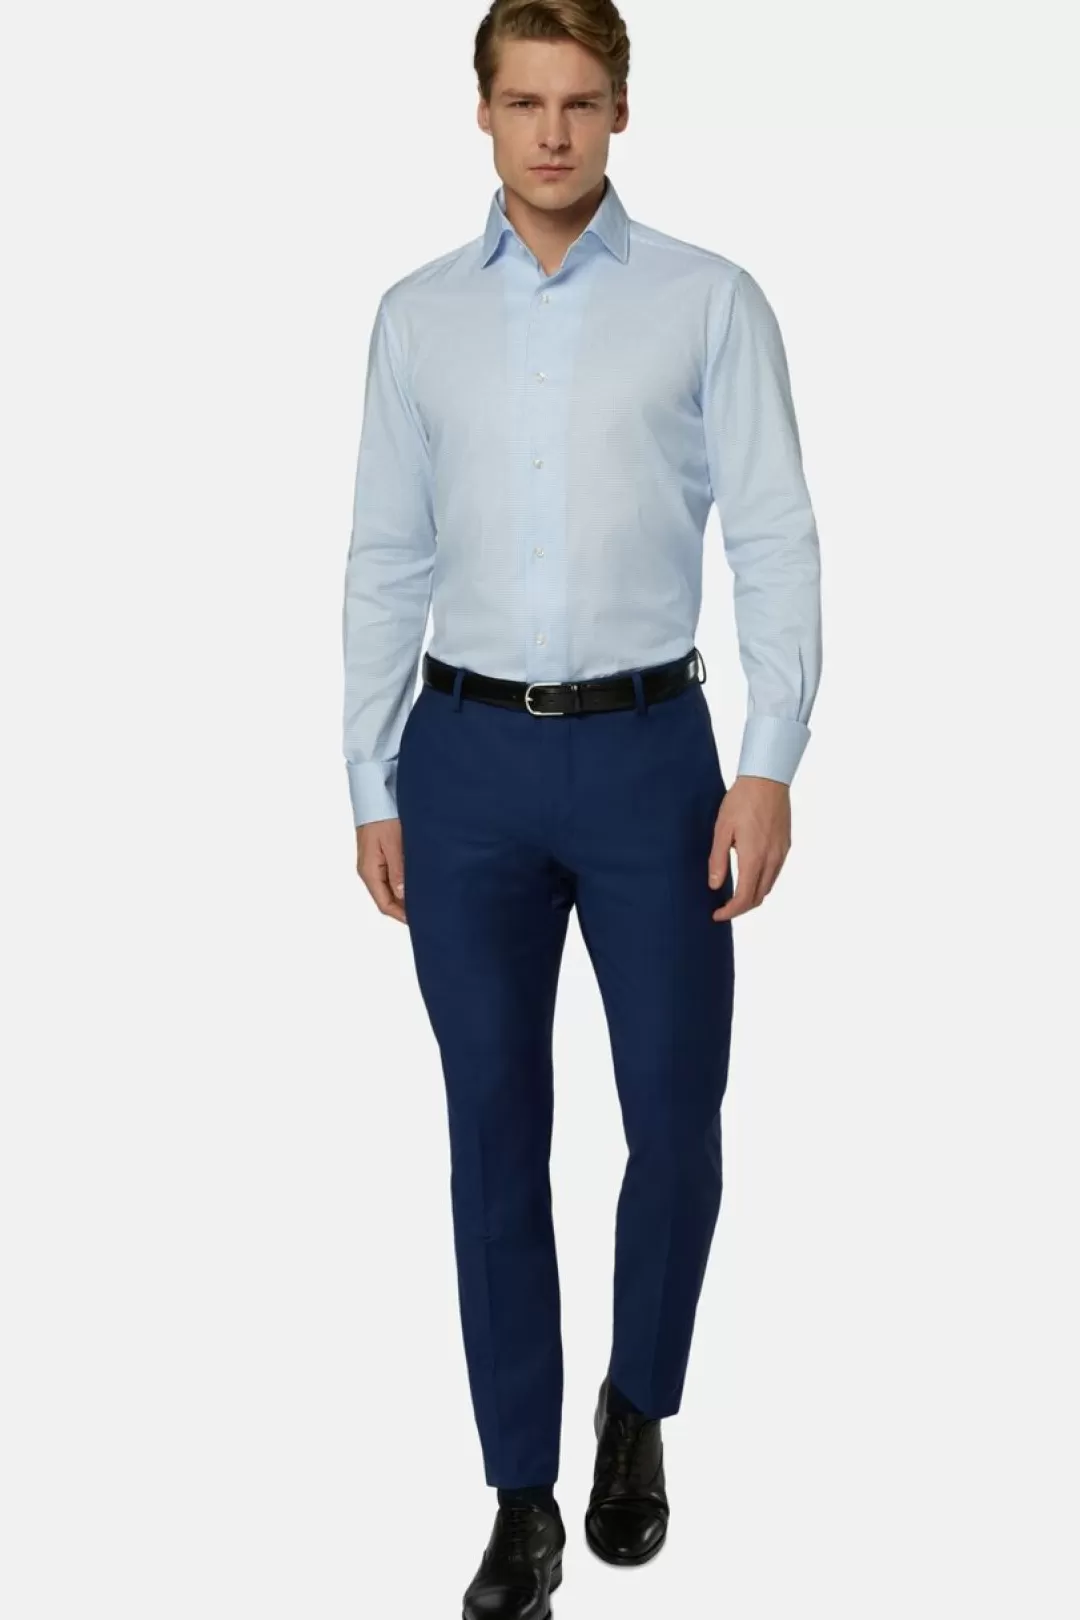 Boggi Camicia A Quadretti Azzurri In Cotone Regular Fit Blu Chiaro Best